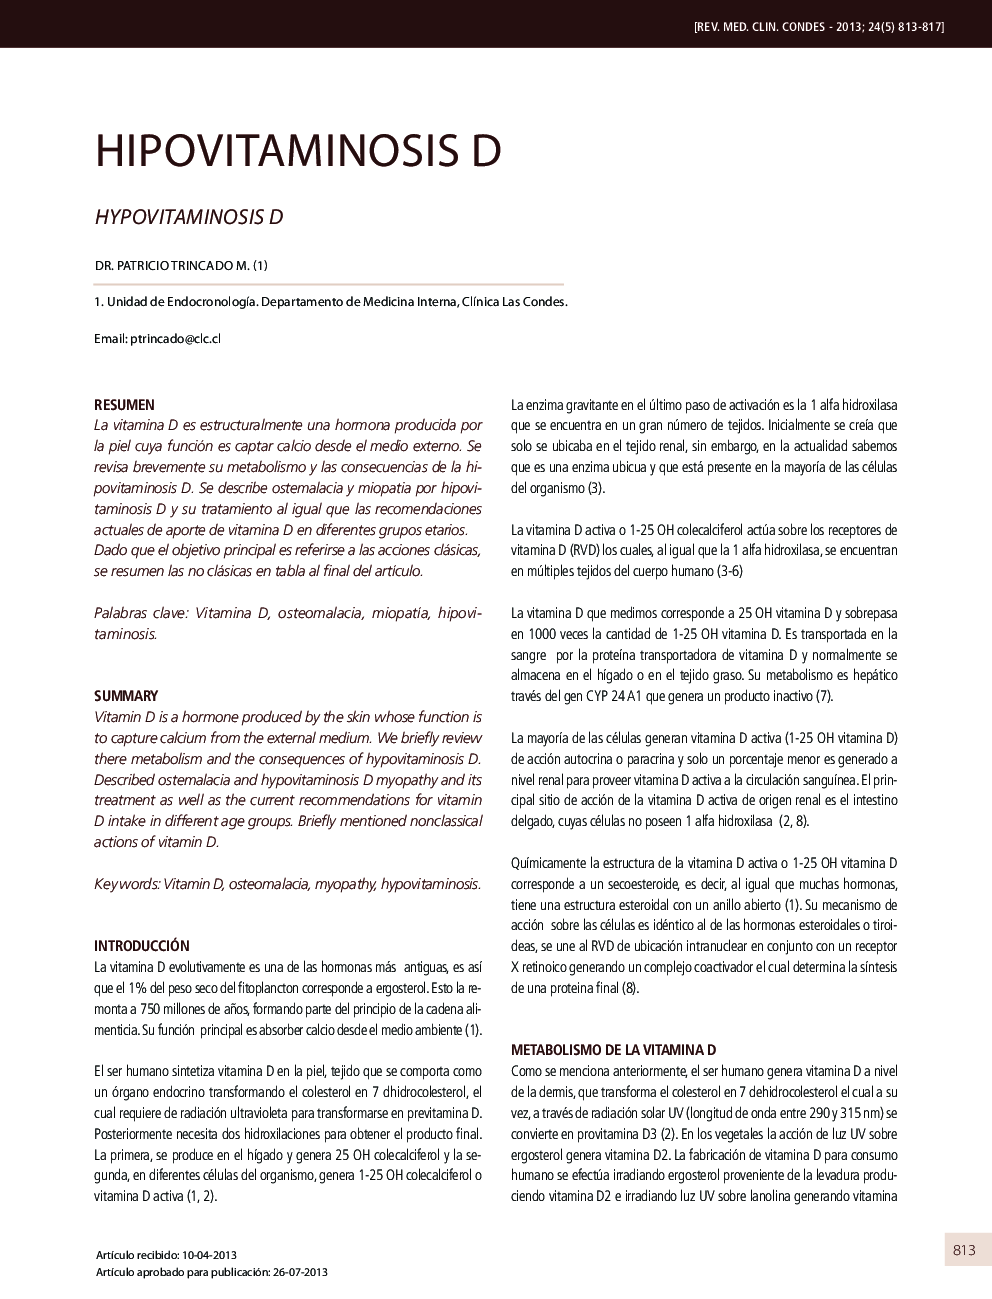 Hipovitaminosis D